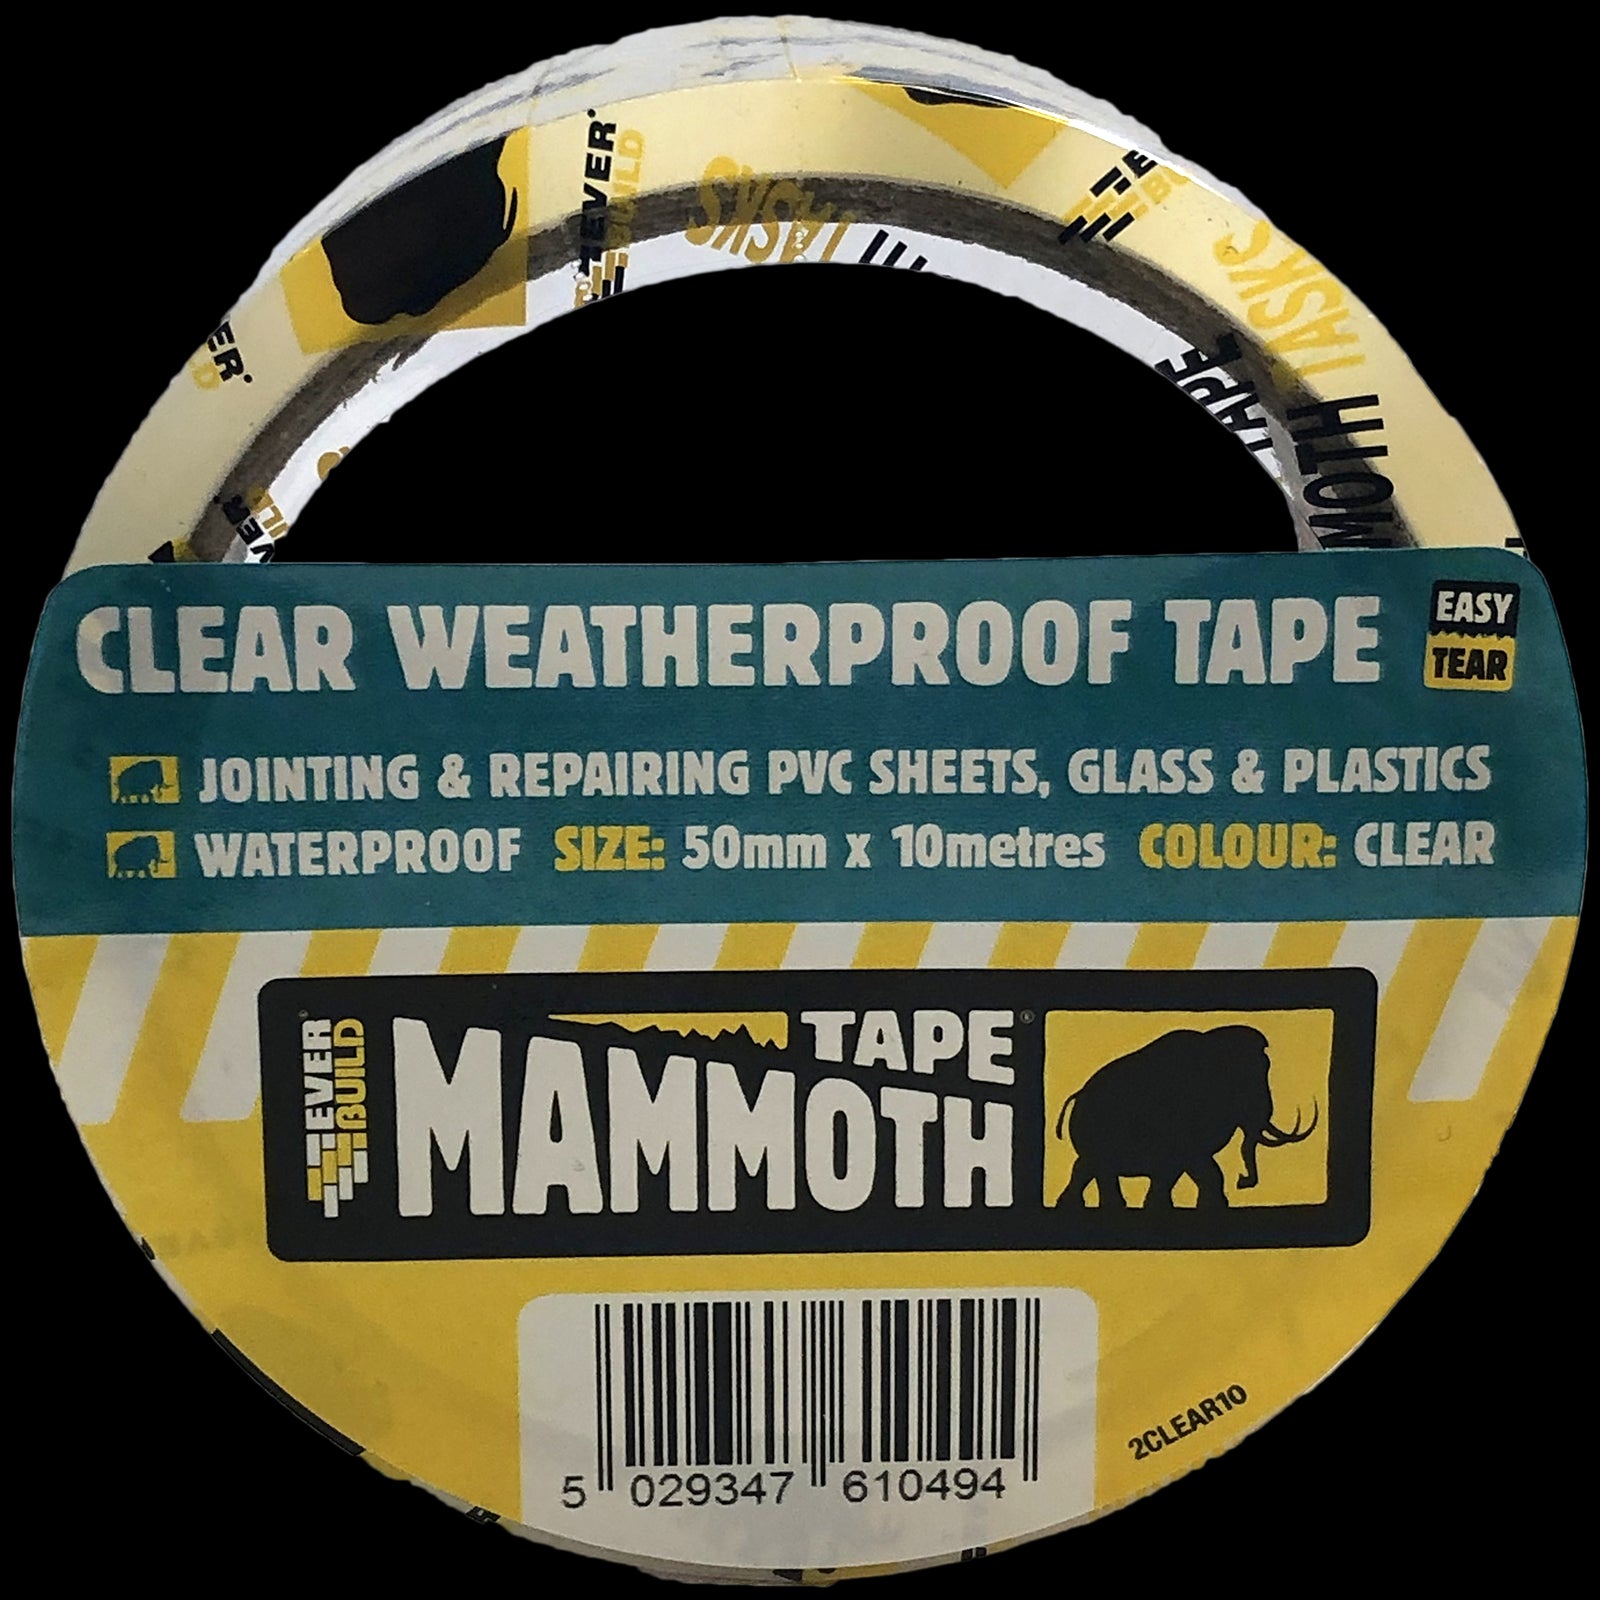 EverBuild Clear Weatherproof Tape Mammoth 50mm x 10m Easy Tear Waterproof